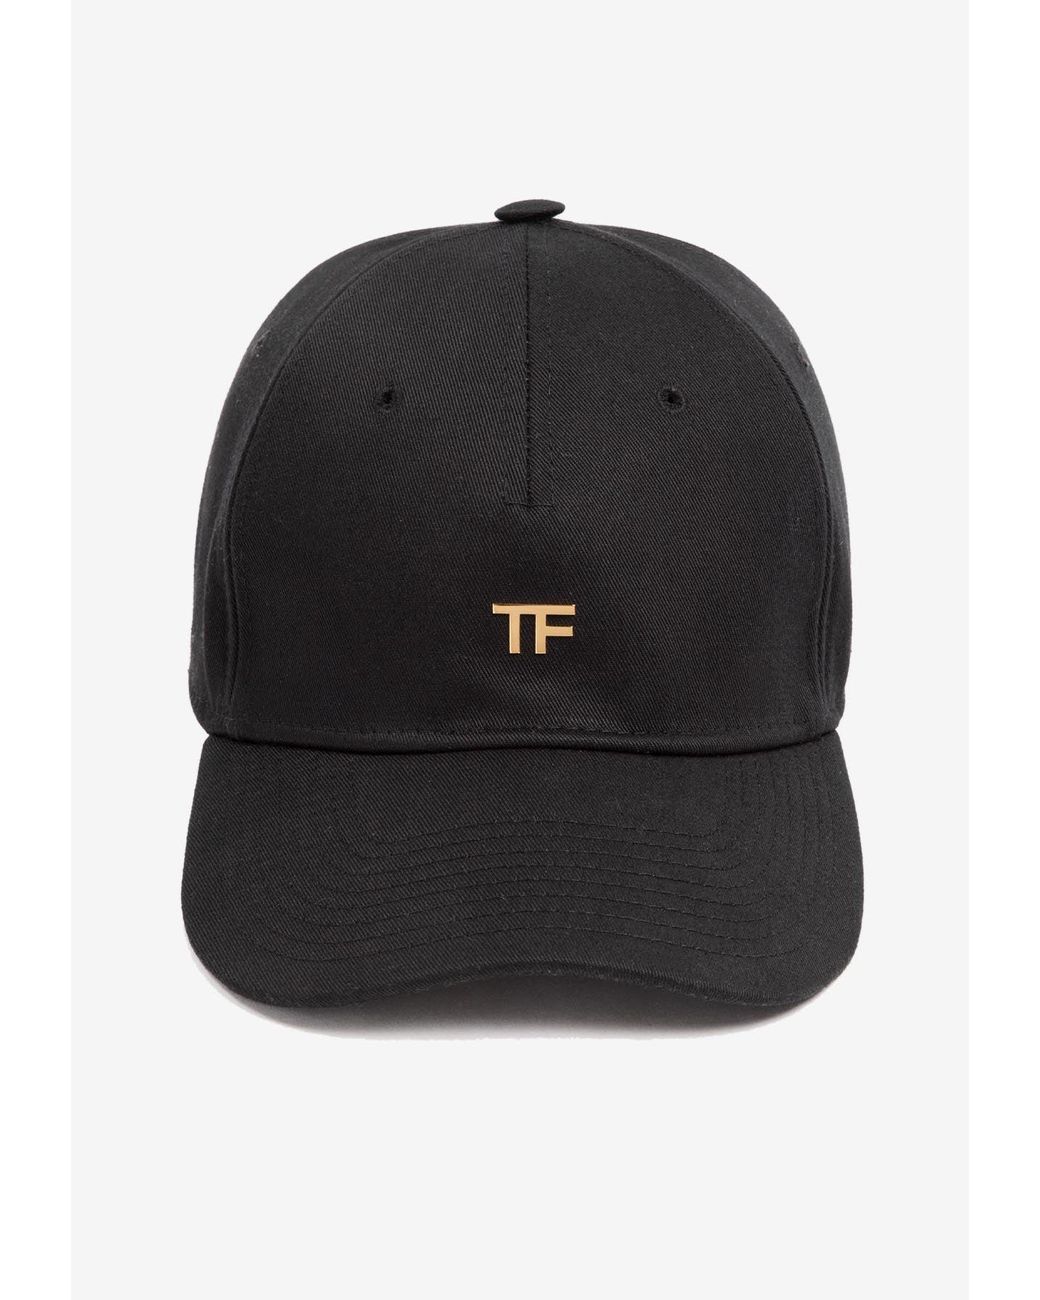 Tom Ford Tf Logo Baseball Cap in Black | Lyst